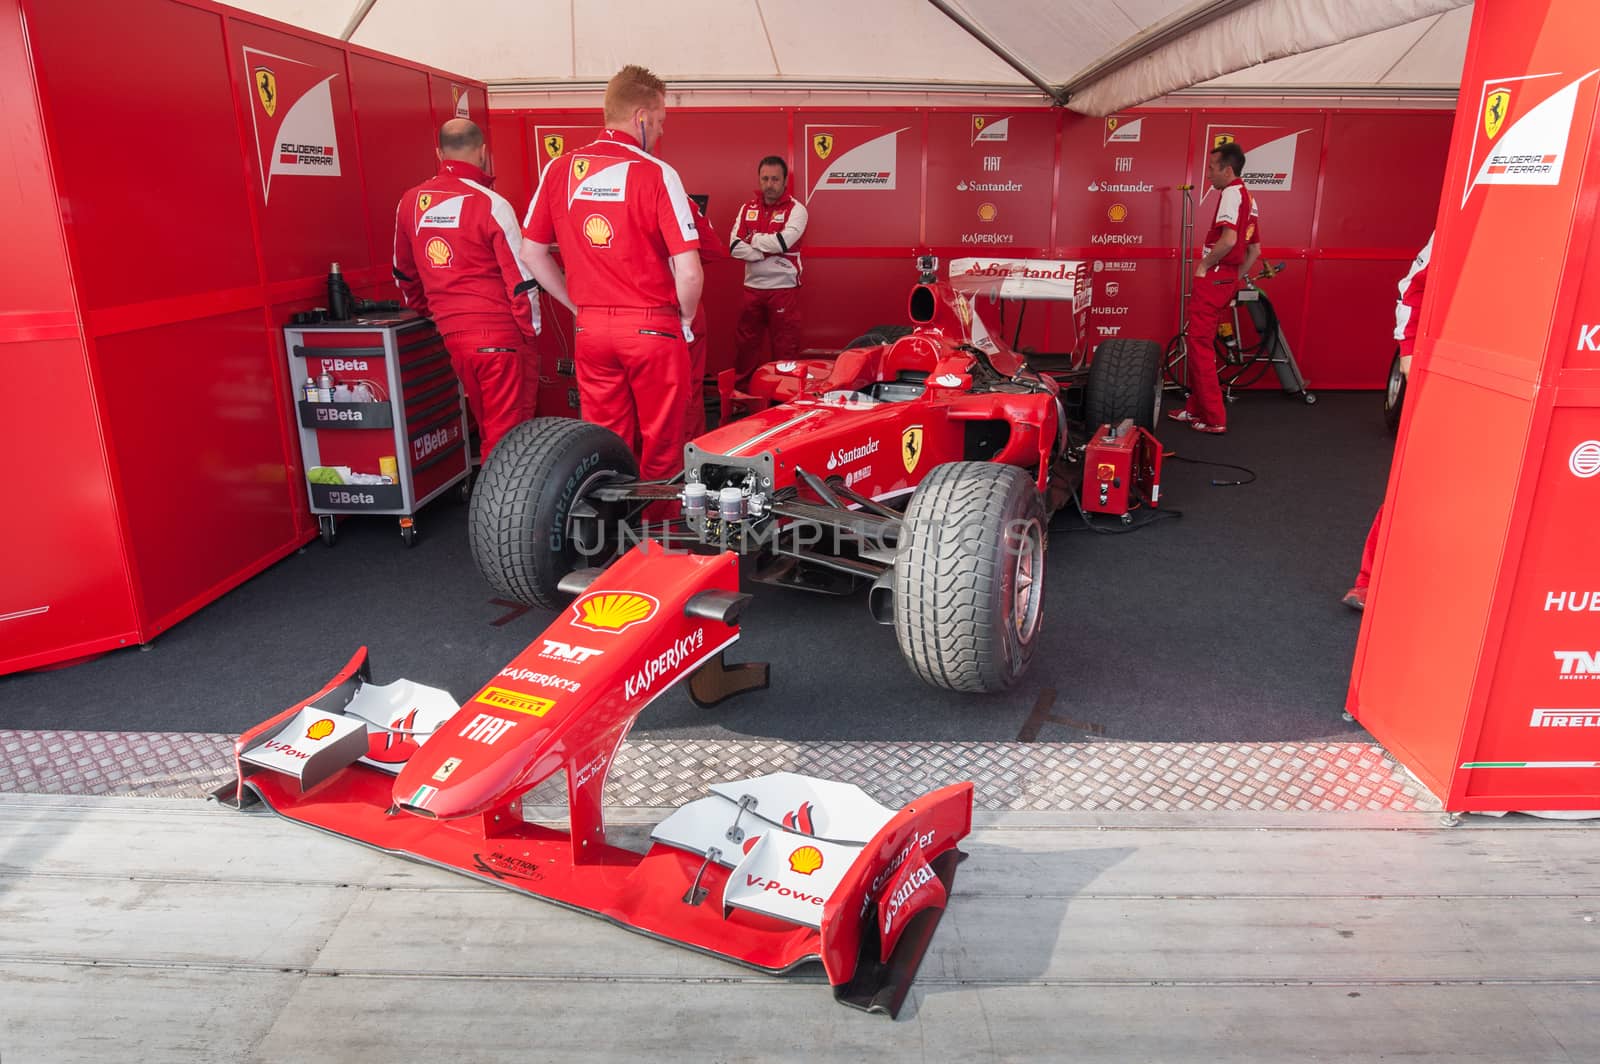 Ferrari F1 by nelsonart